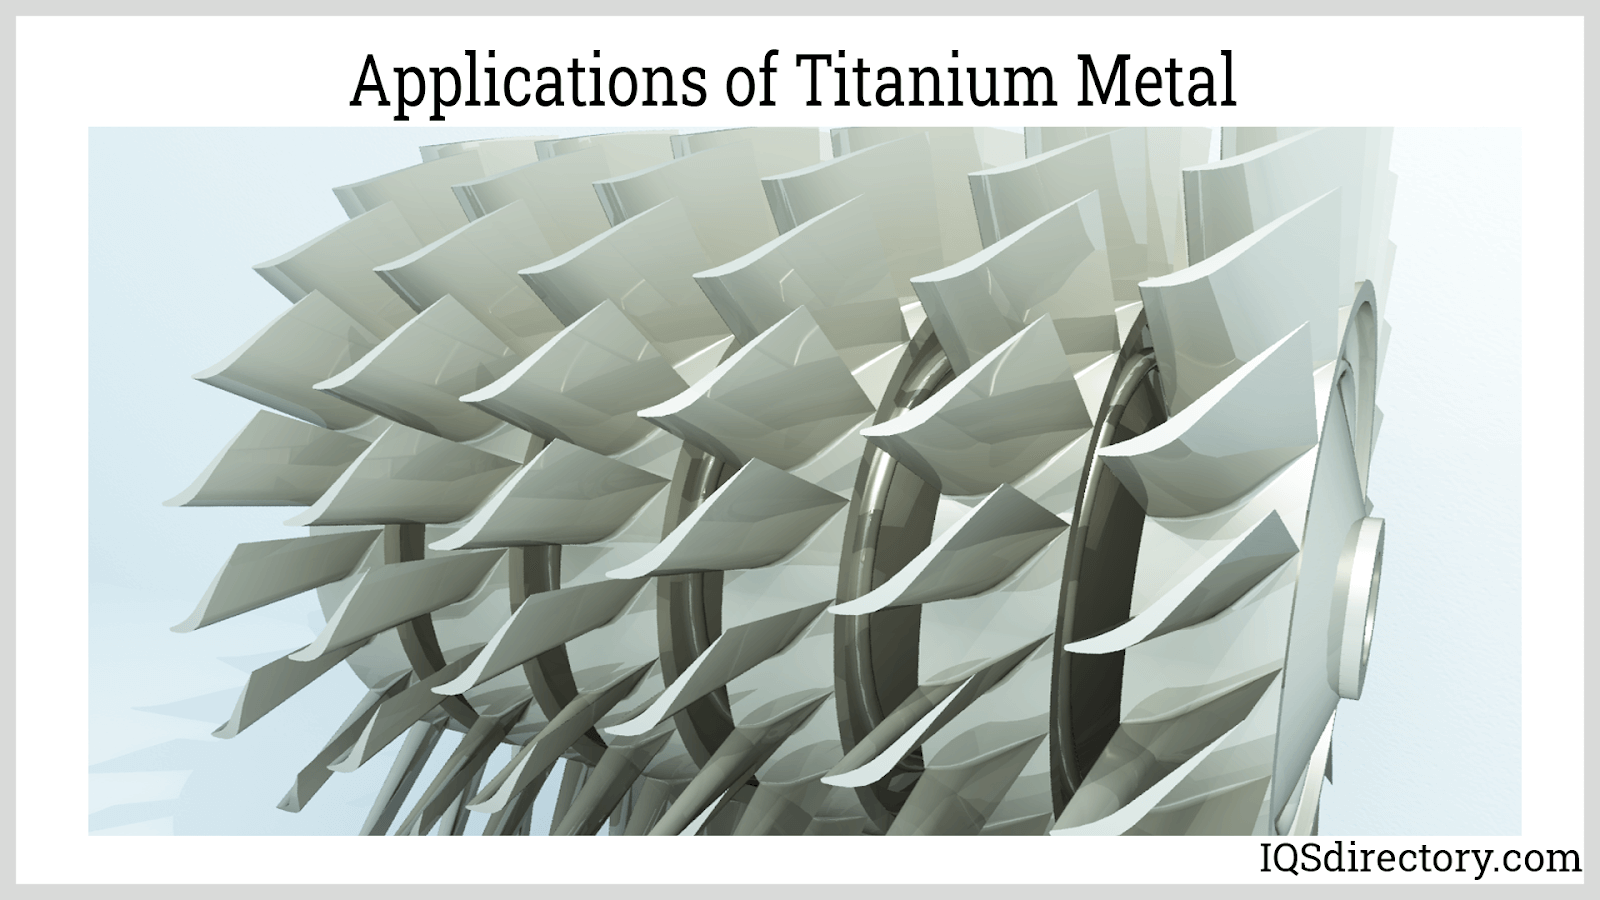 Applications of Titanium Metal